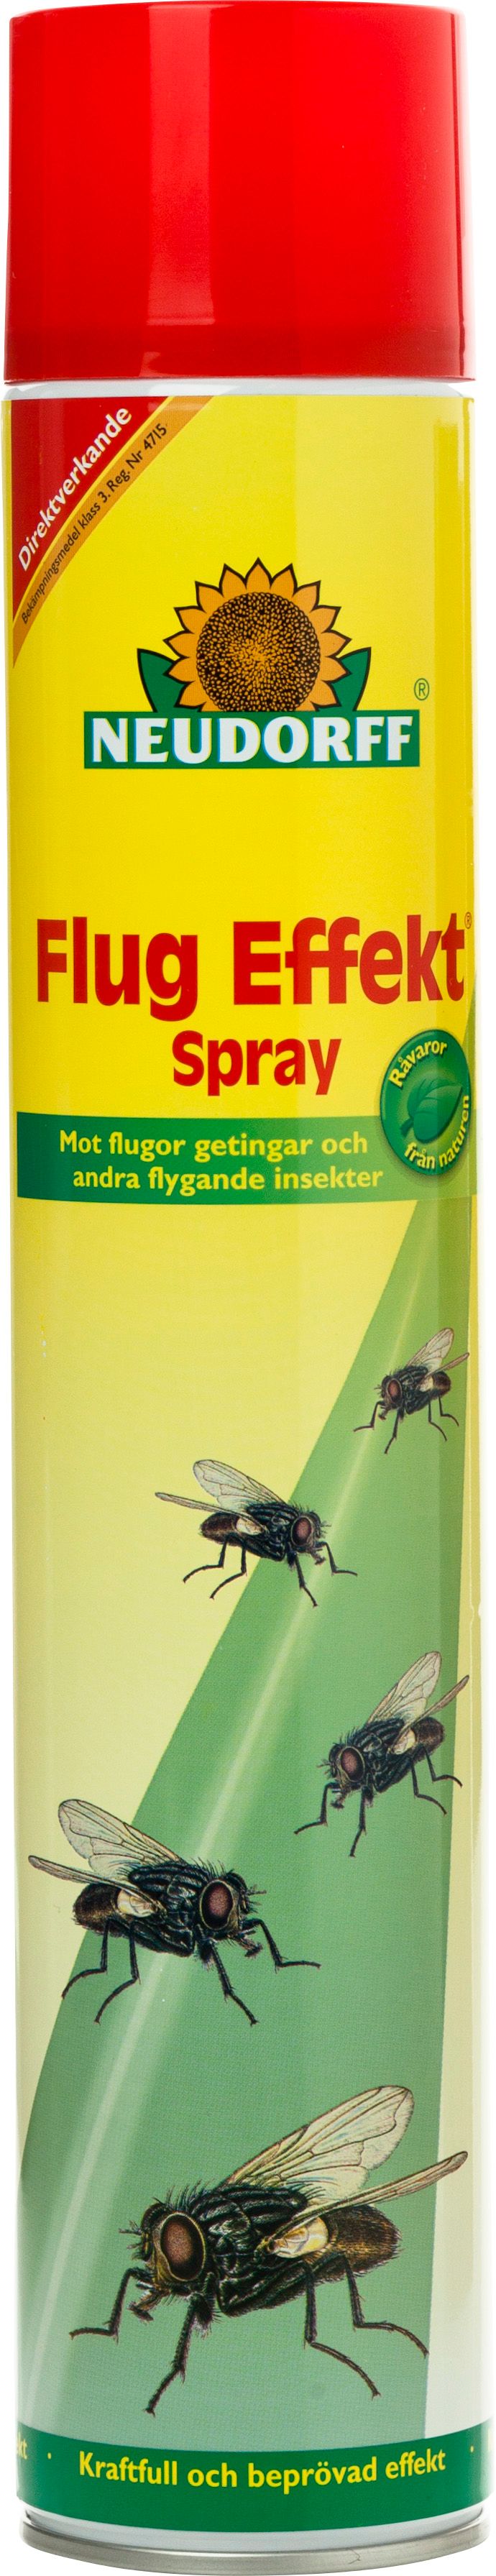 Flug Effekt Spray 750ml - Neudorff